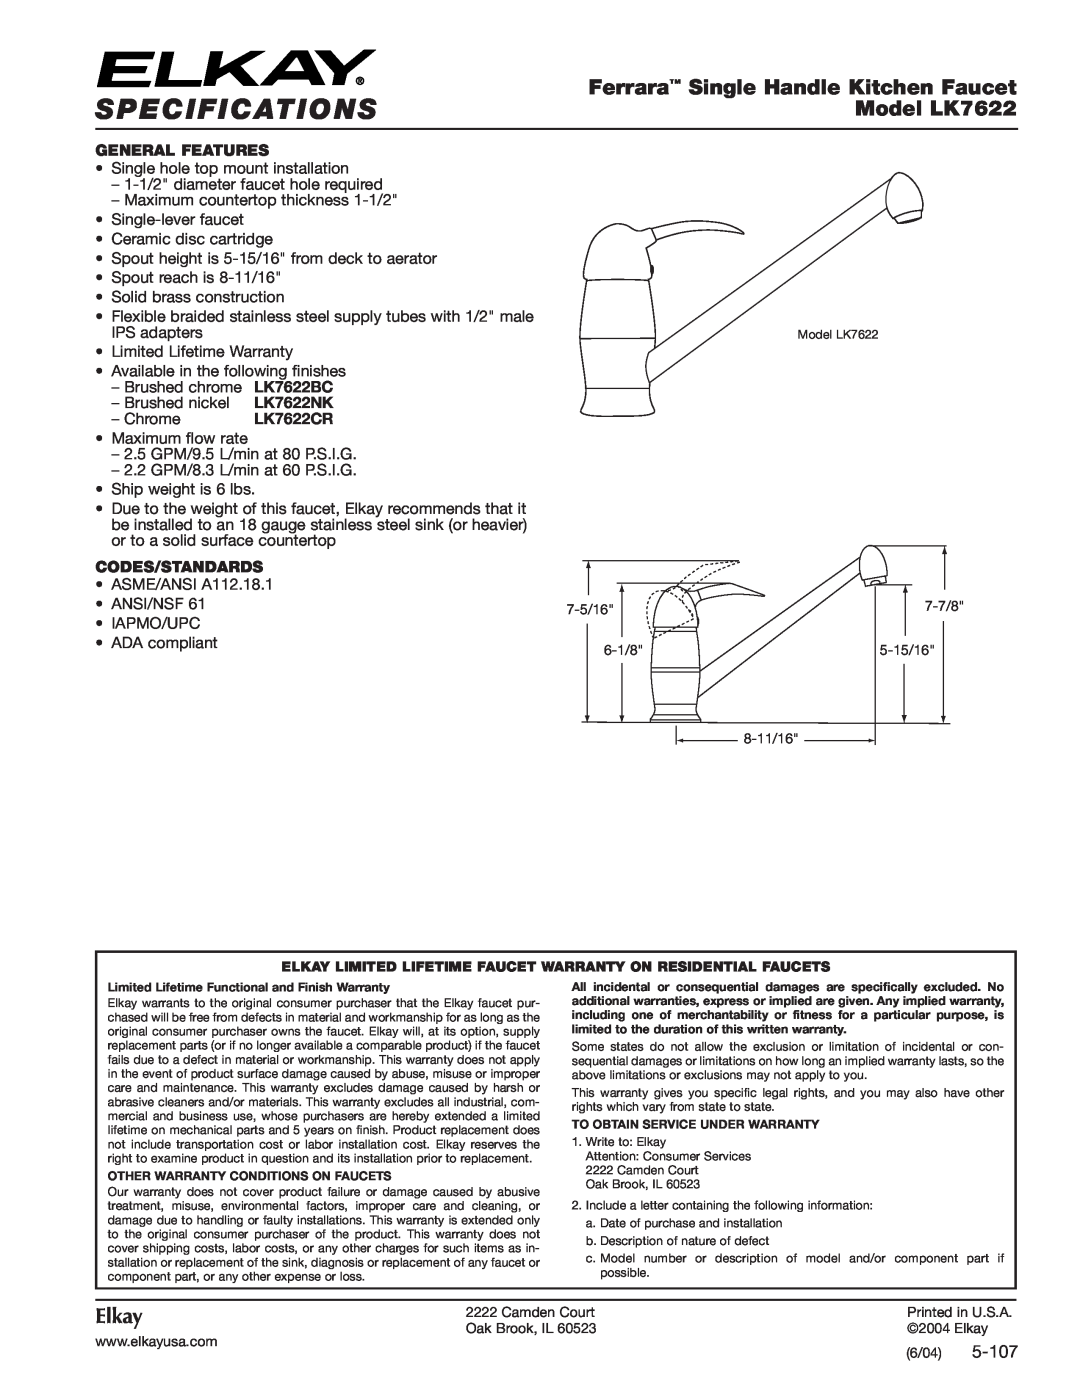 Elkay specifications Specifications, Ferrara Single Handle Kitchen Faucet, Model LK7622, Elkay, 5-107, General Features 